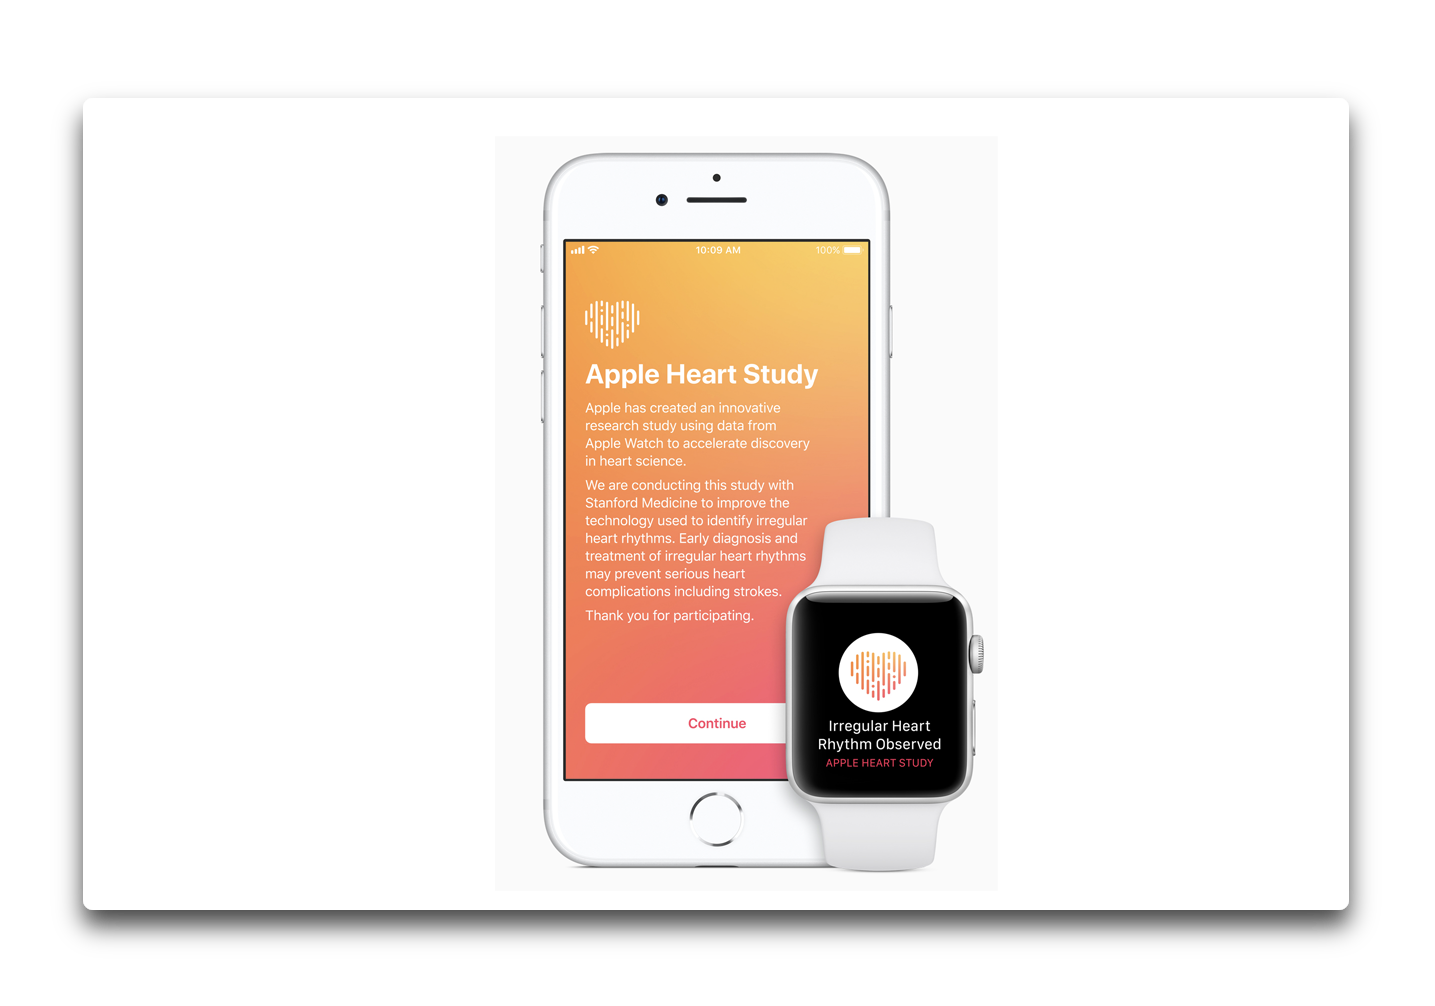 AppleとStanford MedicineがApple Watch Heart Studyの全結果を発表